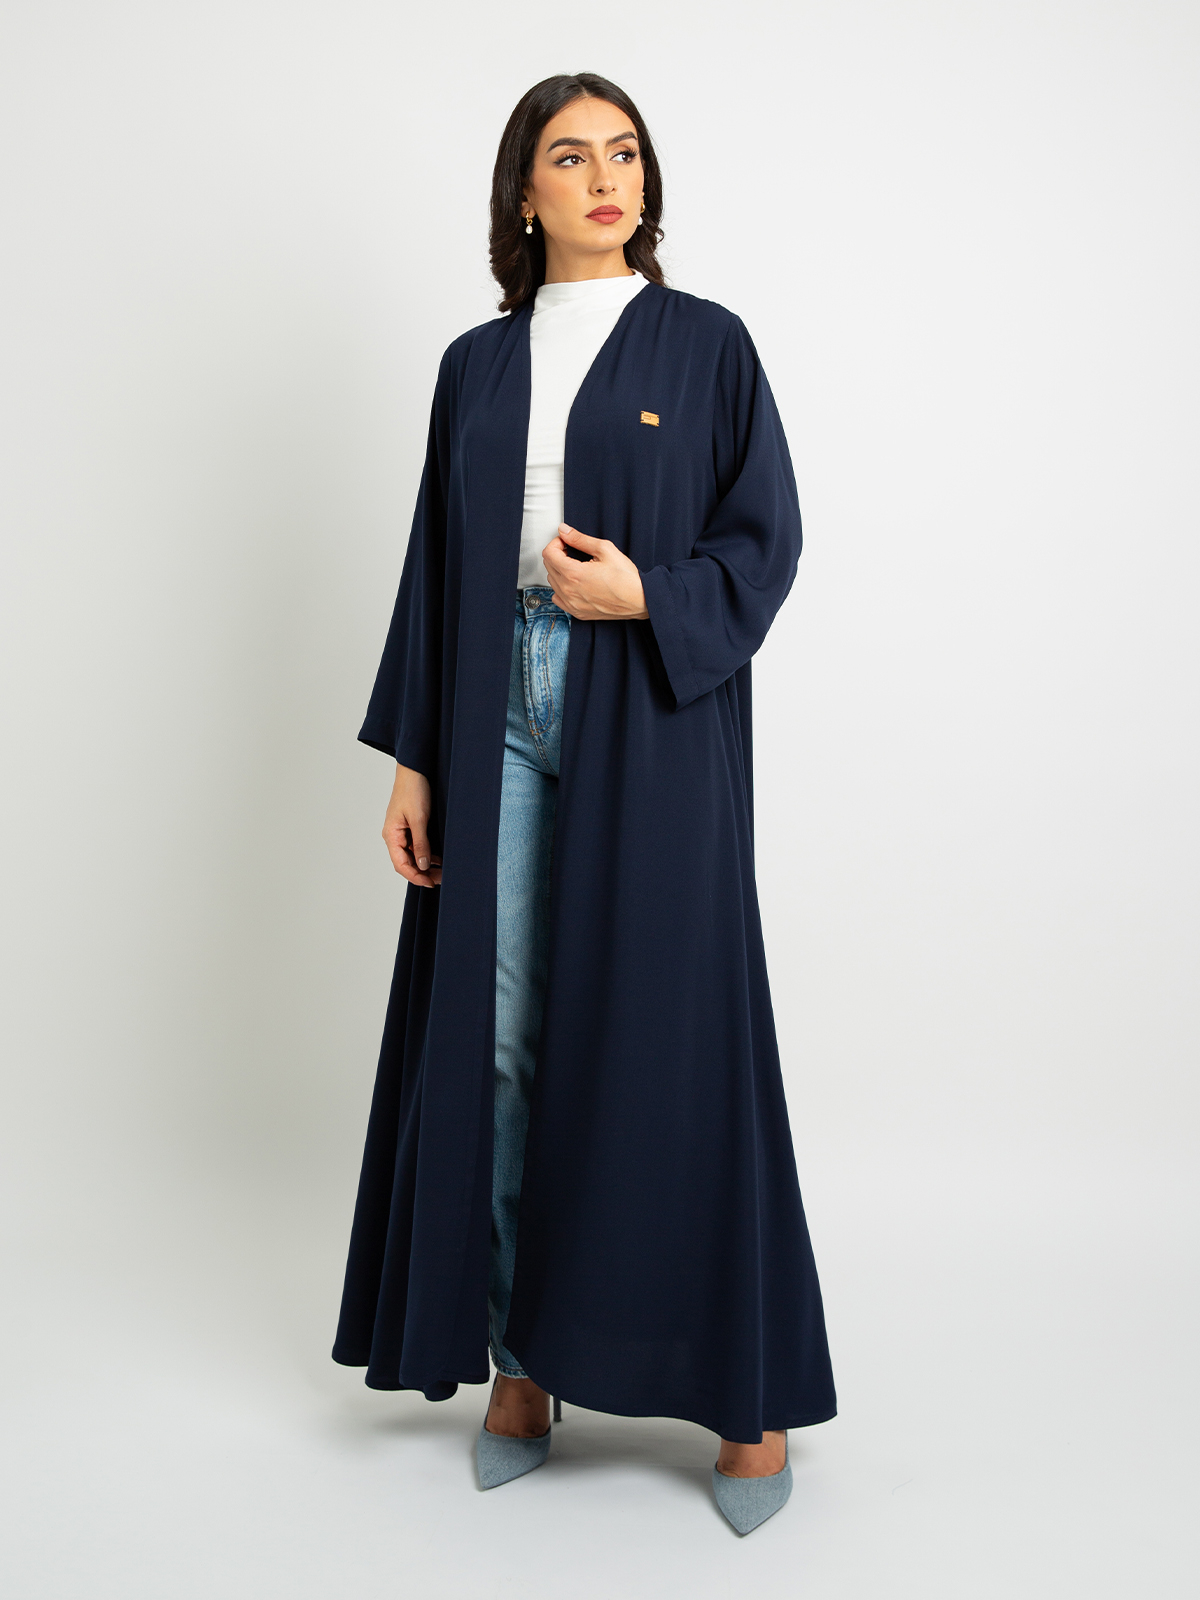 Navy - A Cut Long Open Half Cloche Abaya in Crepe Fabric